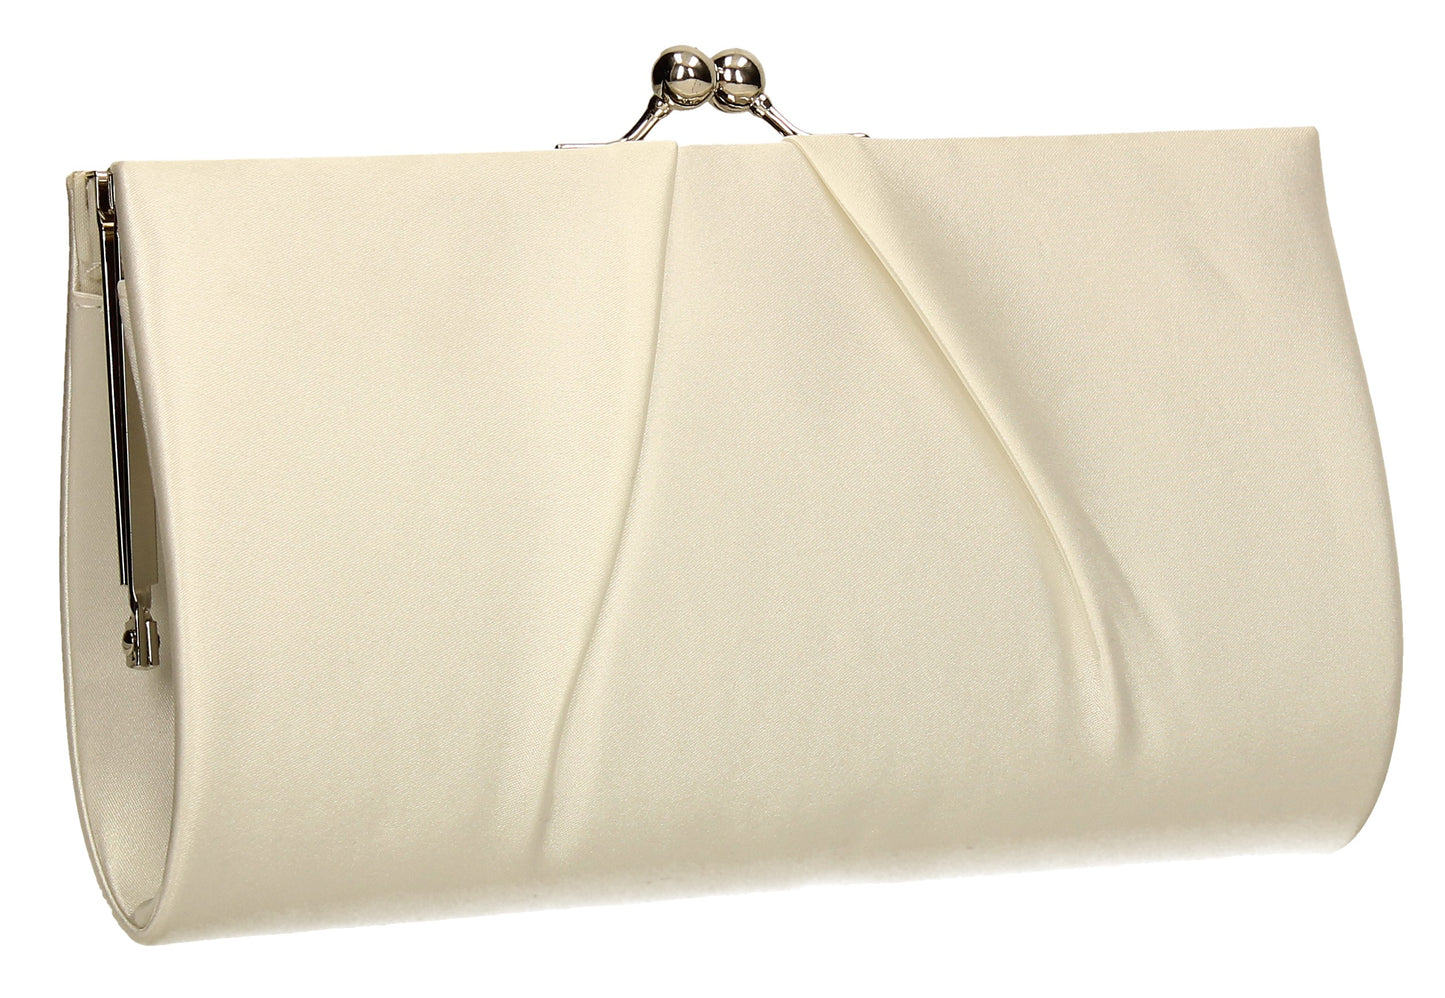 SWANKYSWANS Katy Satin Clutch Bag Ivory Cute Cheap Clutch Bag For Weddings School and Work